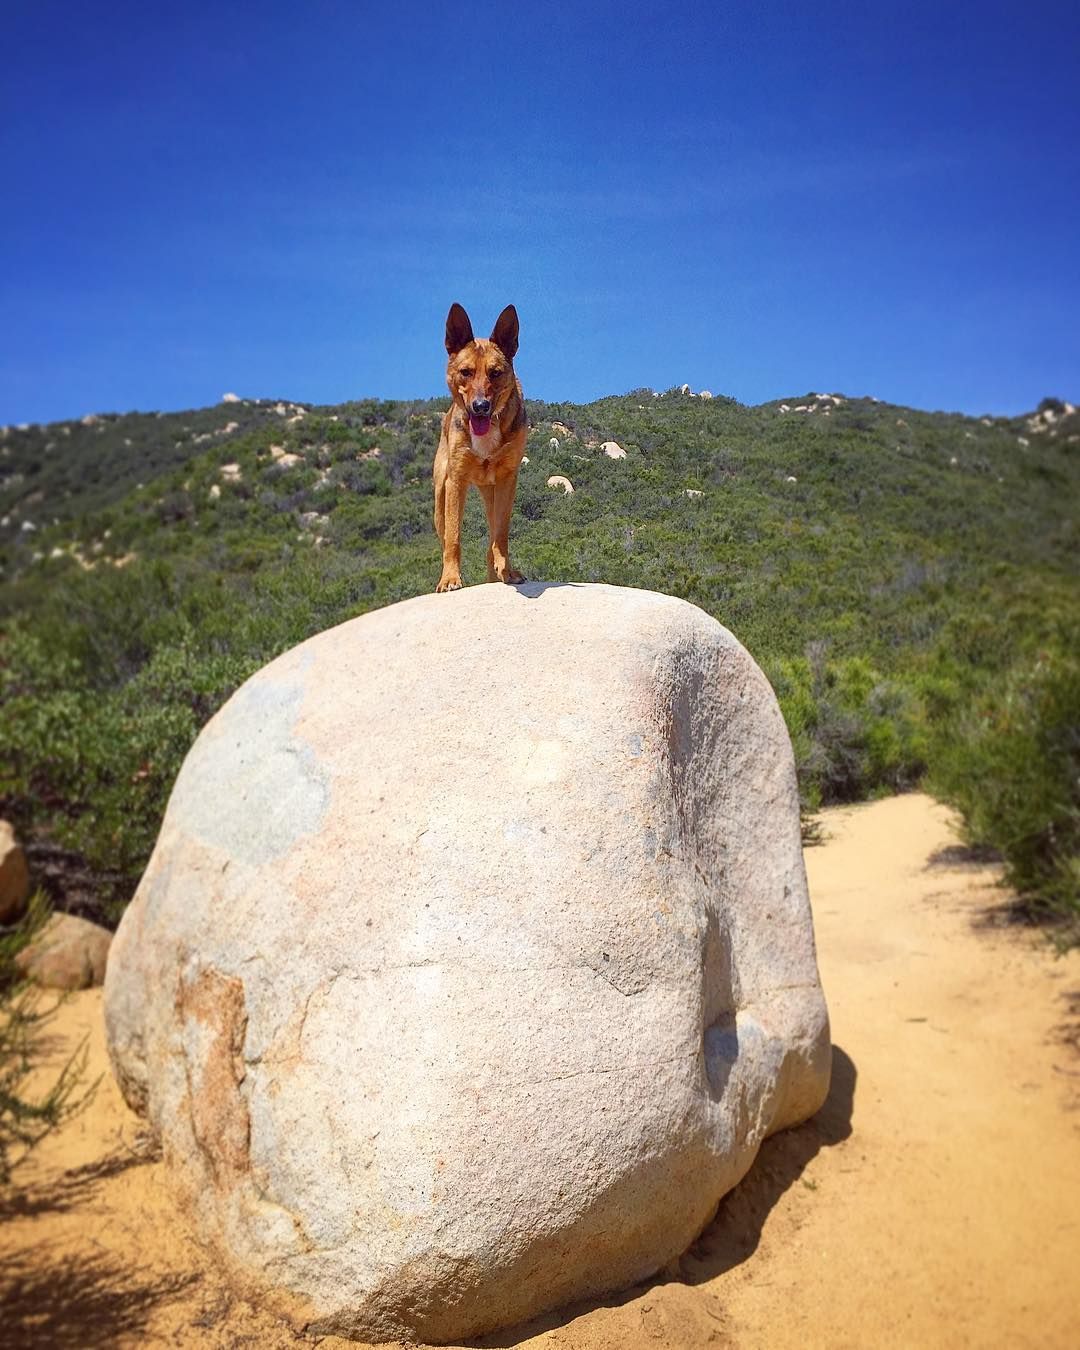 9 Best Dog-Friendly Hikes in Orange County